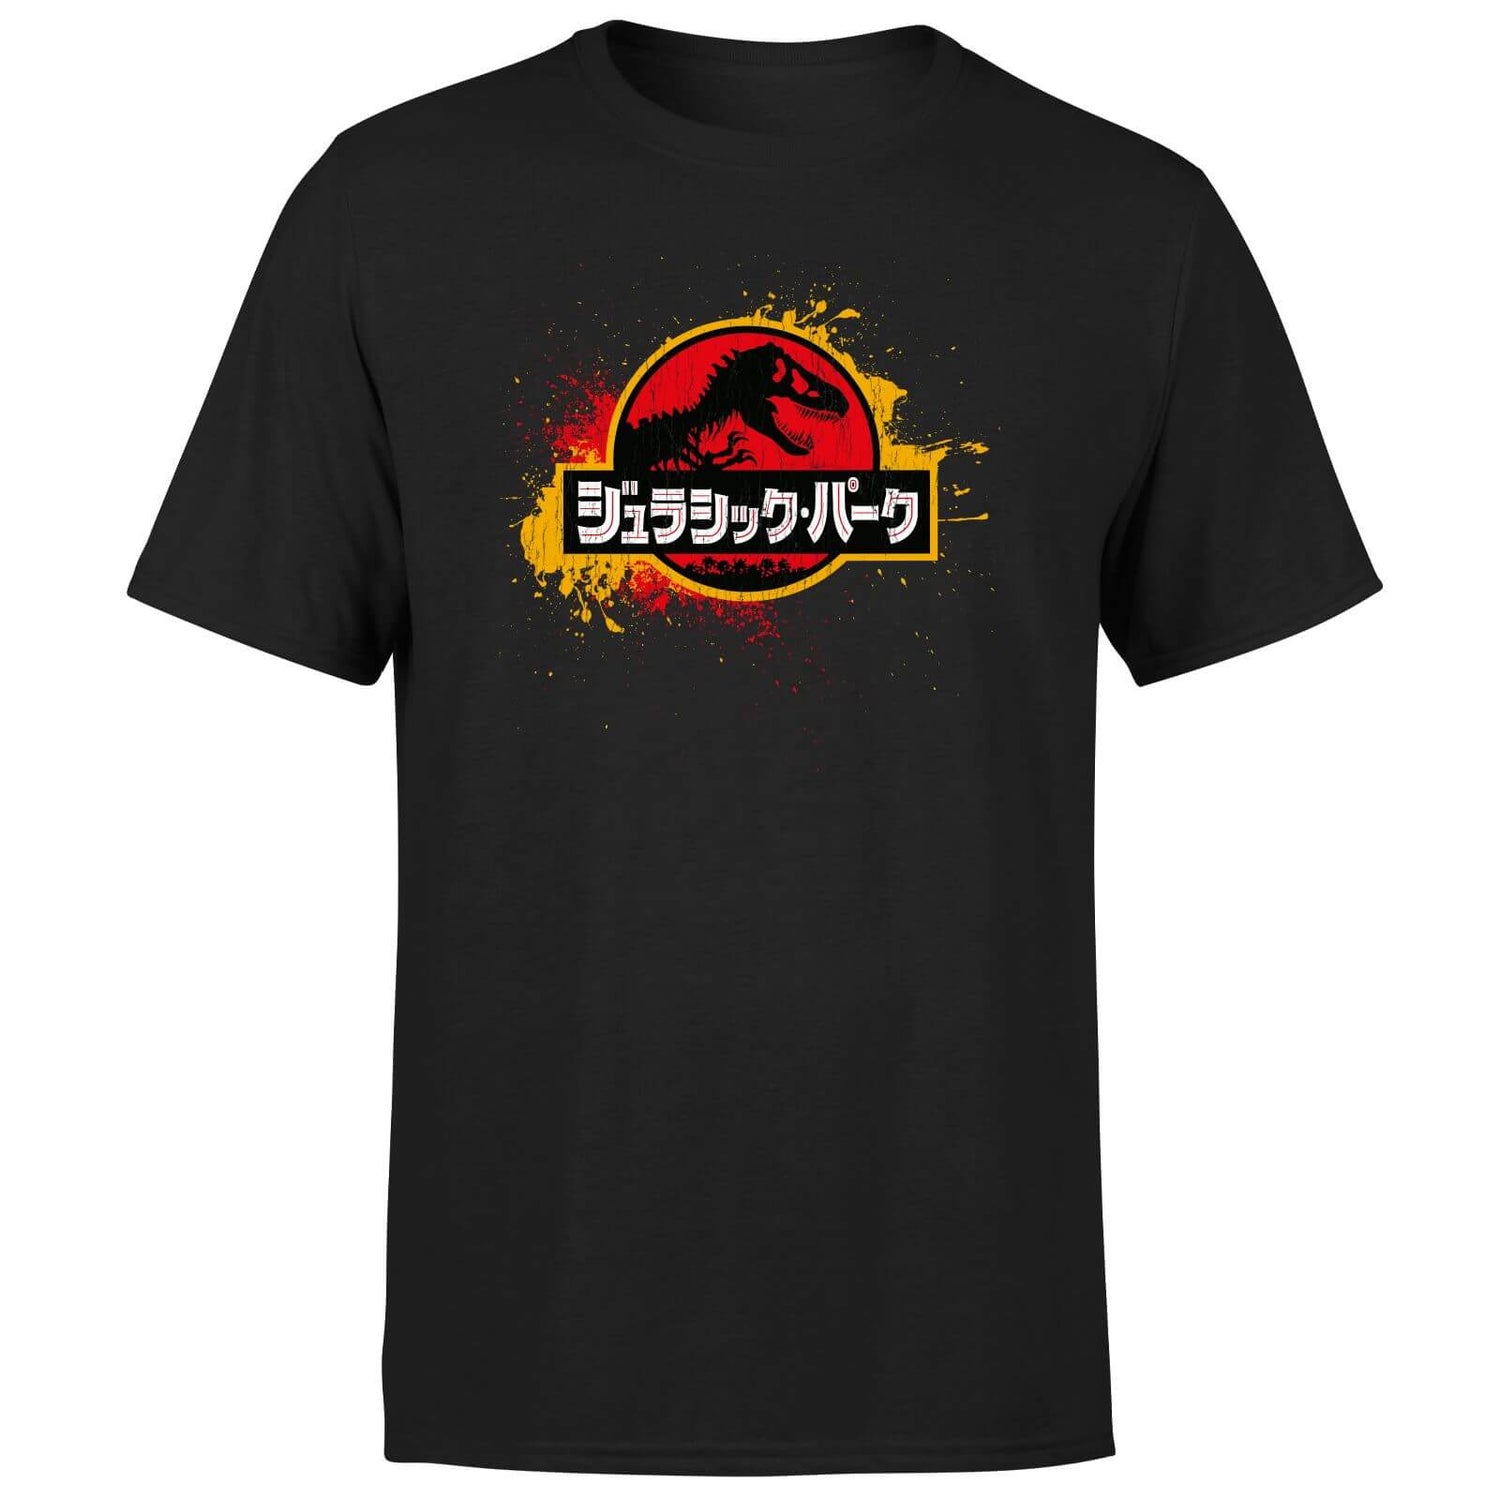 Jurassic Park Men's T-Shirt - Black Clothing - Zavvi UK